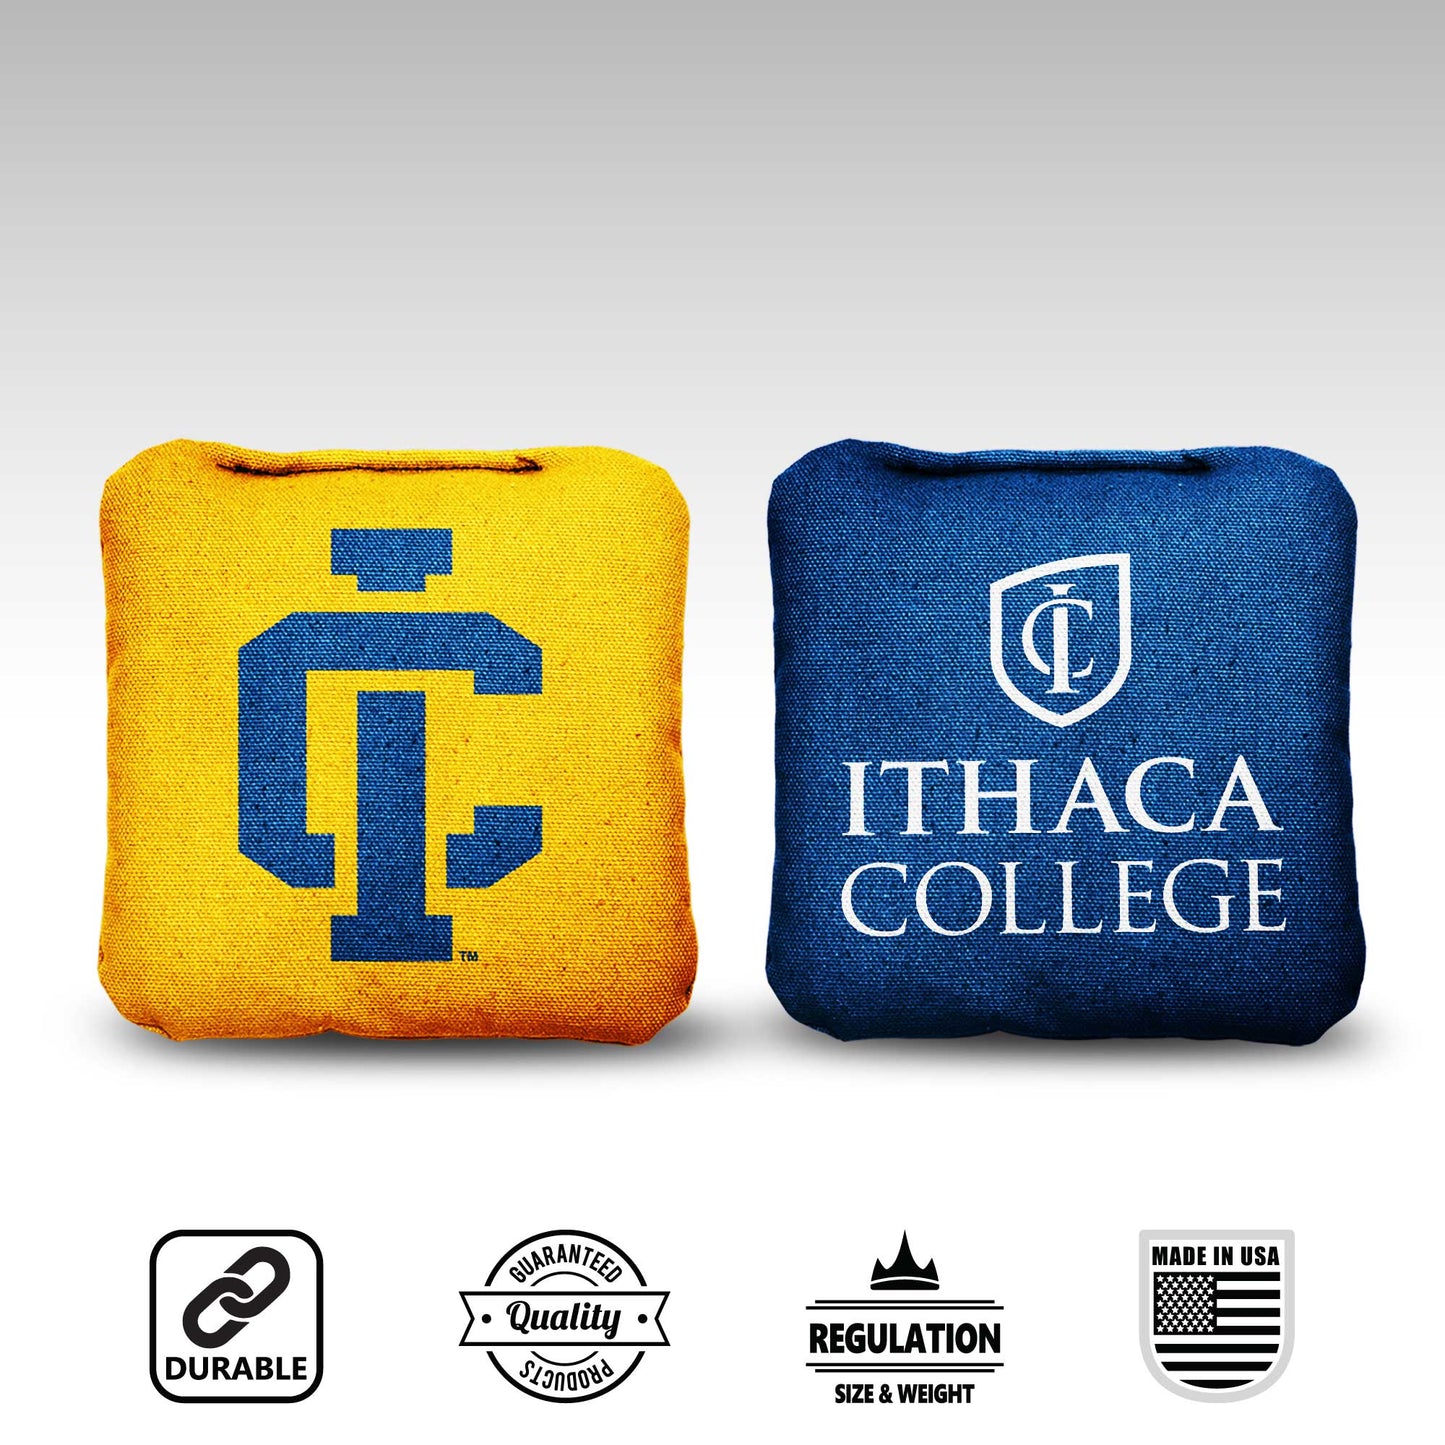 Ithaca College Cornhole Bags - 8 Cornhole Bags